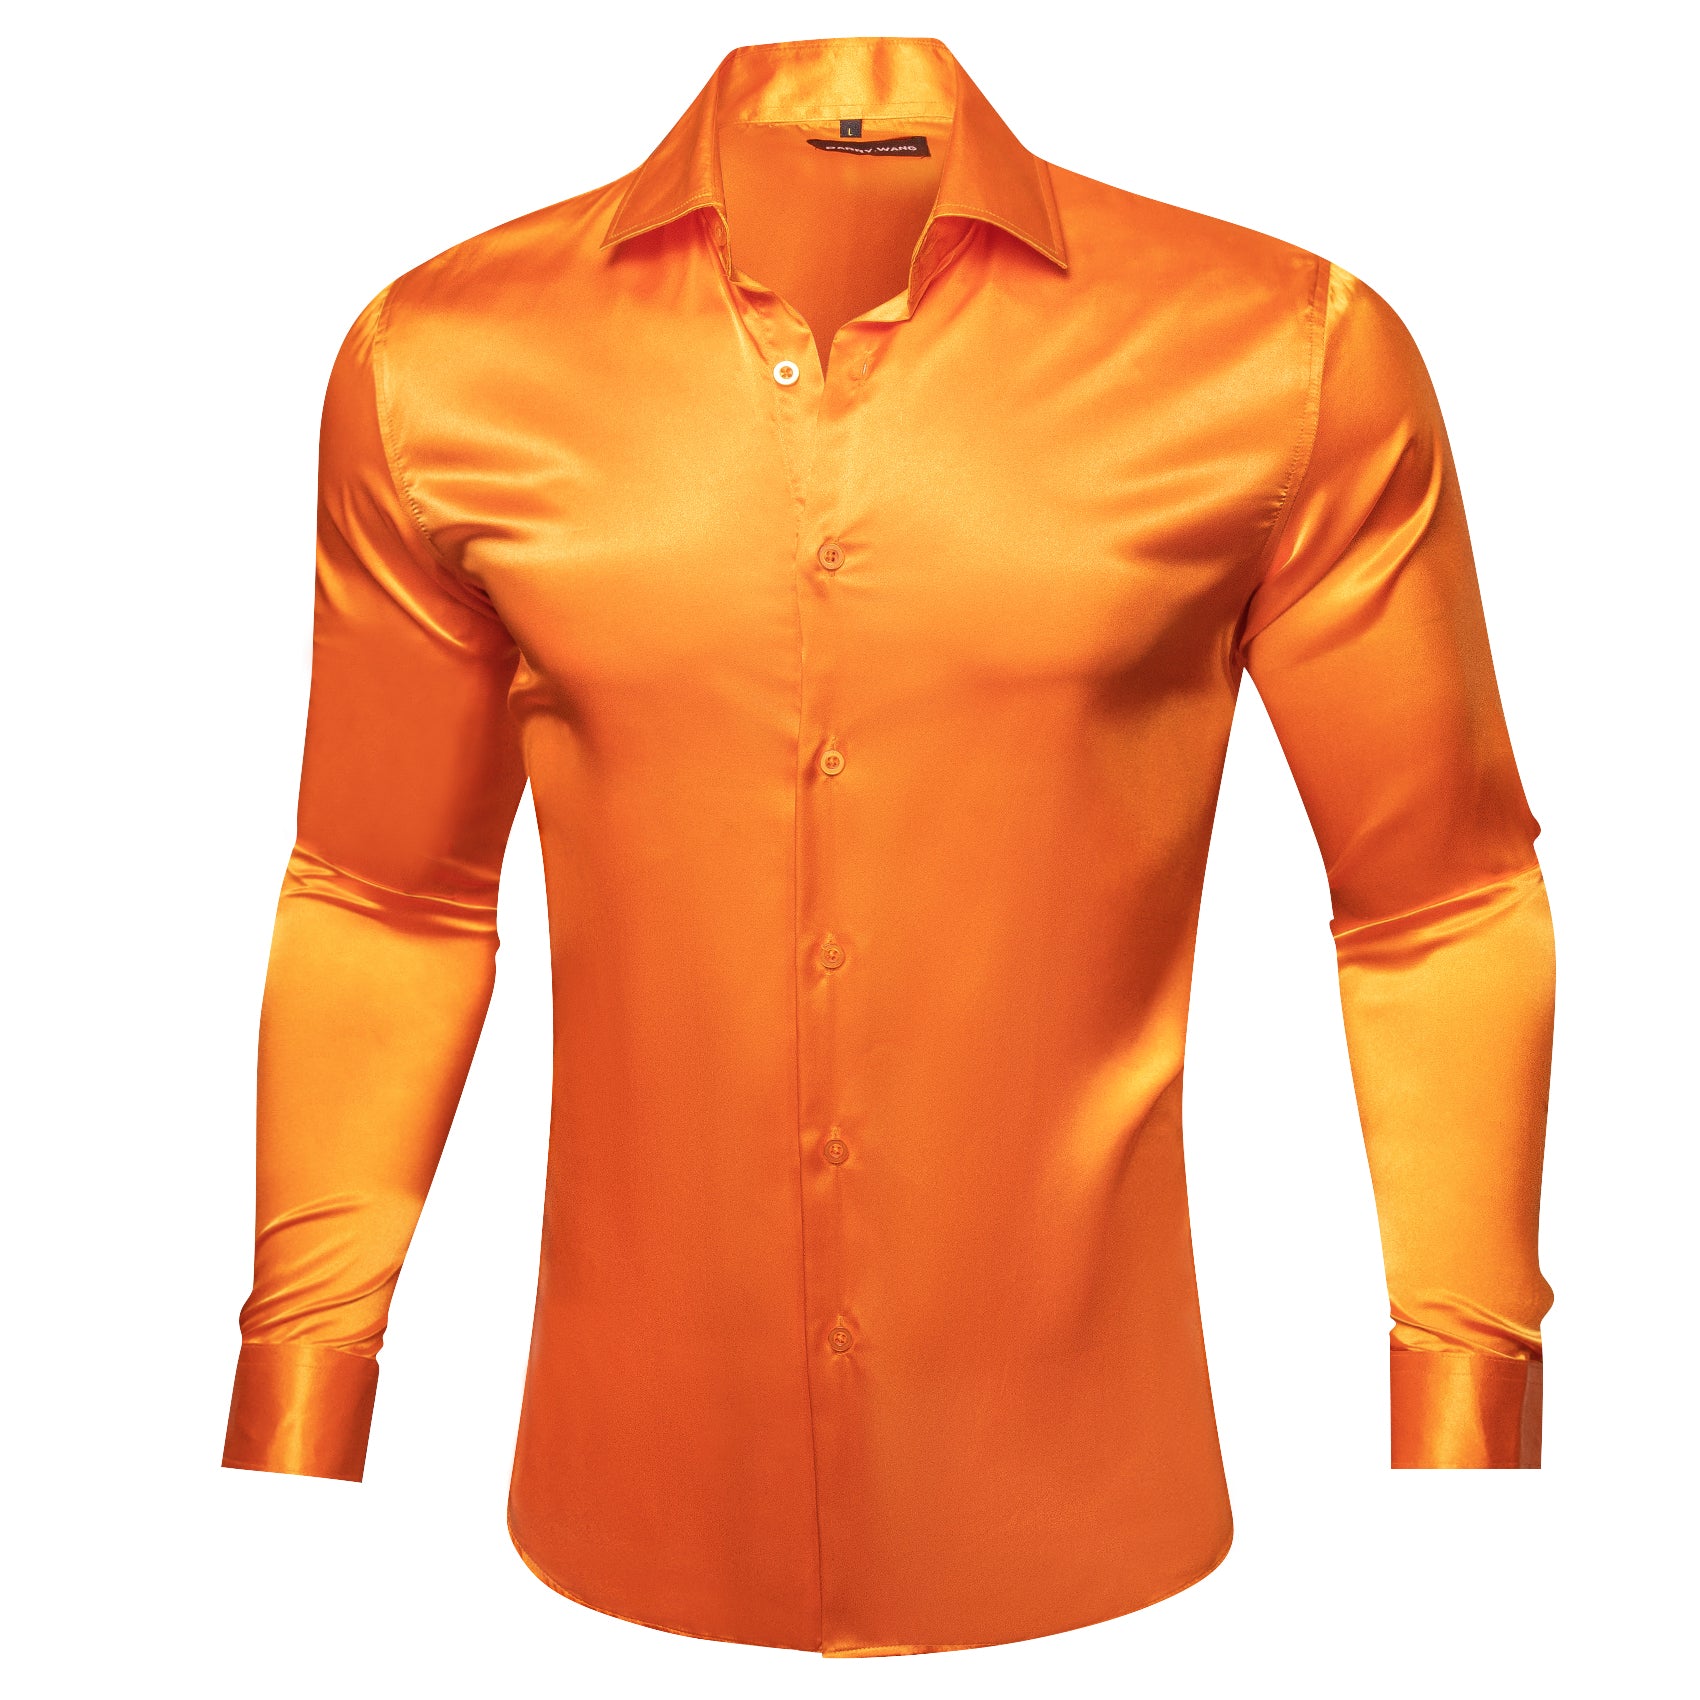 Barry.wang Fashionable Orange Solid Silk Shirt